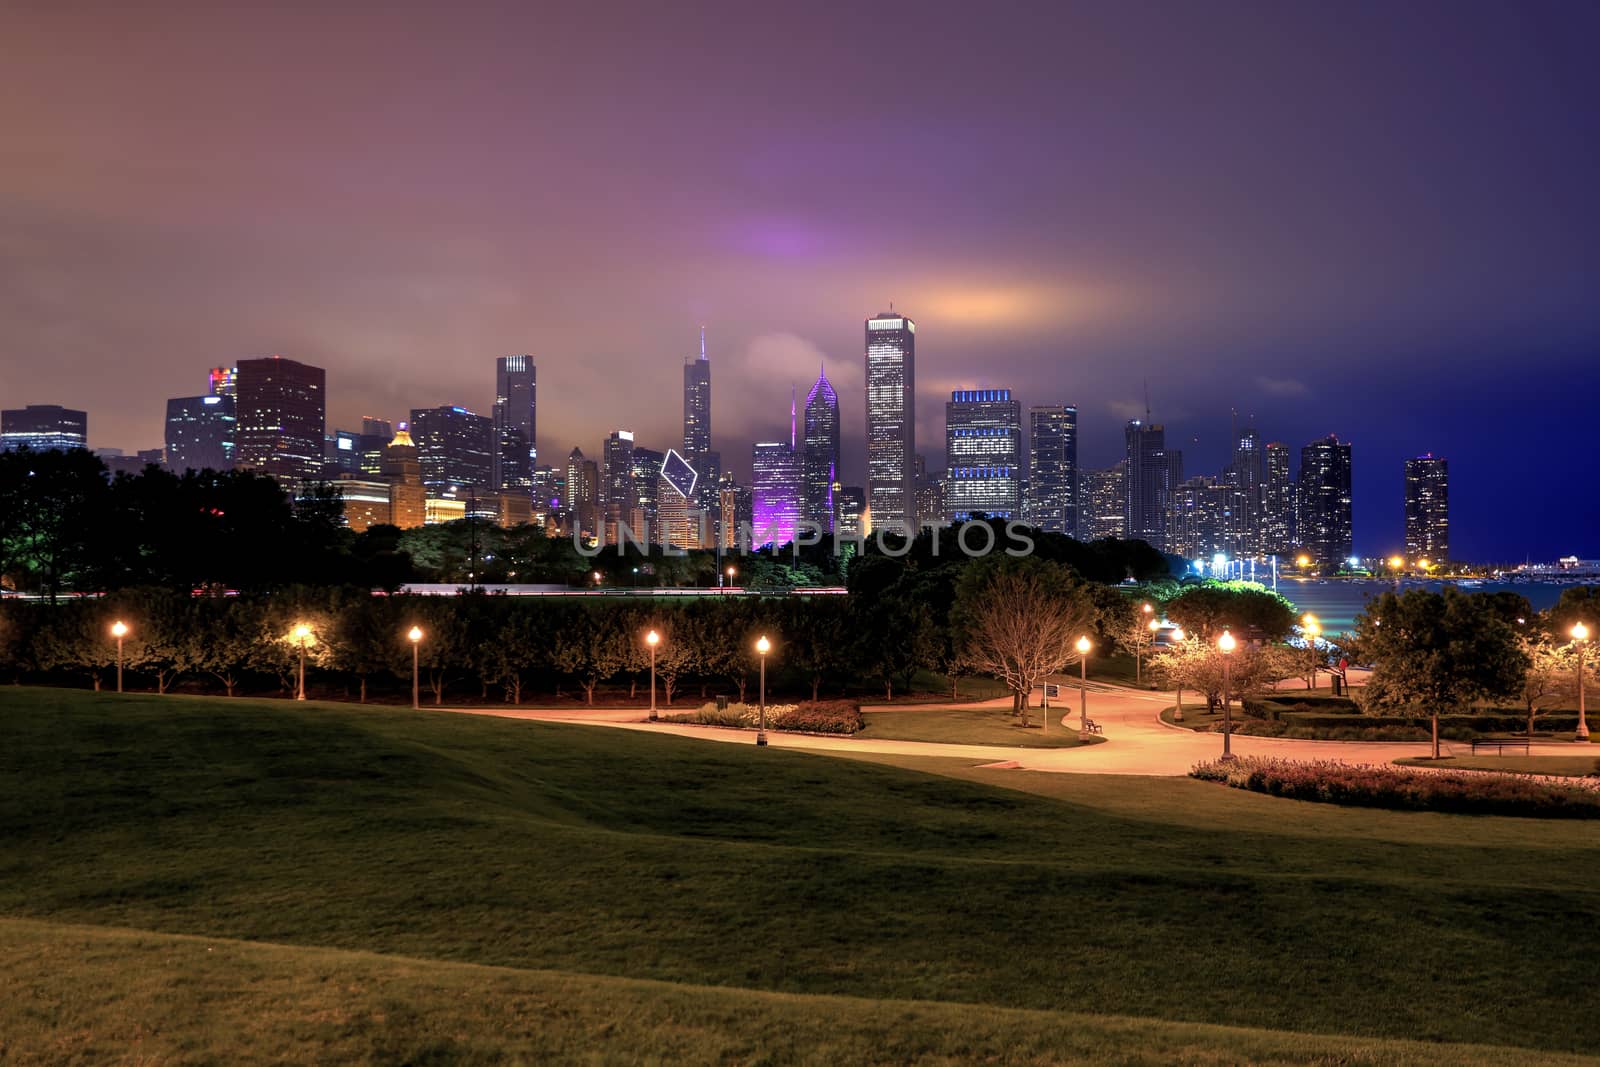 Chicago, Illinois skyline at night by jbyard22